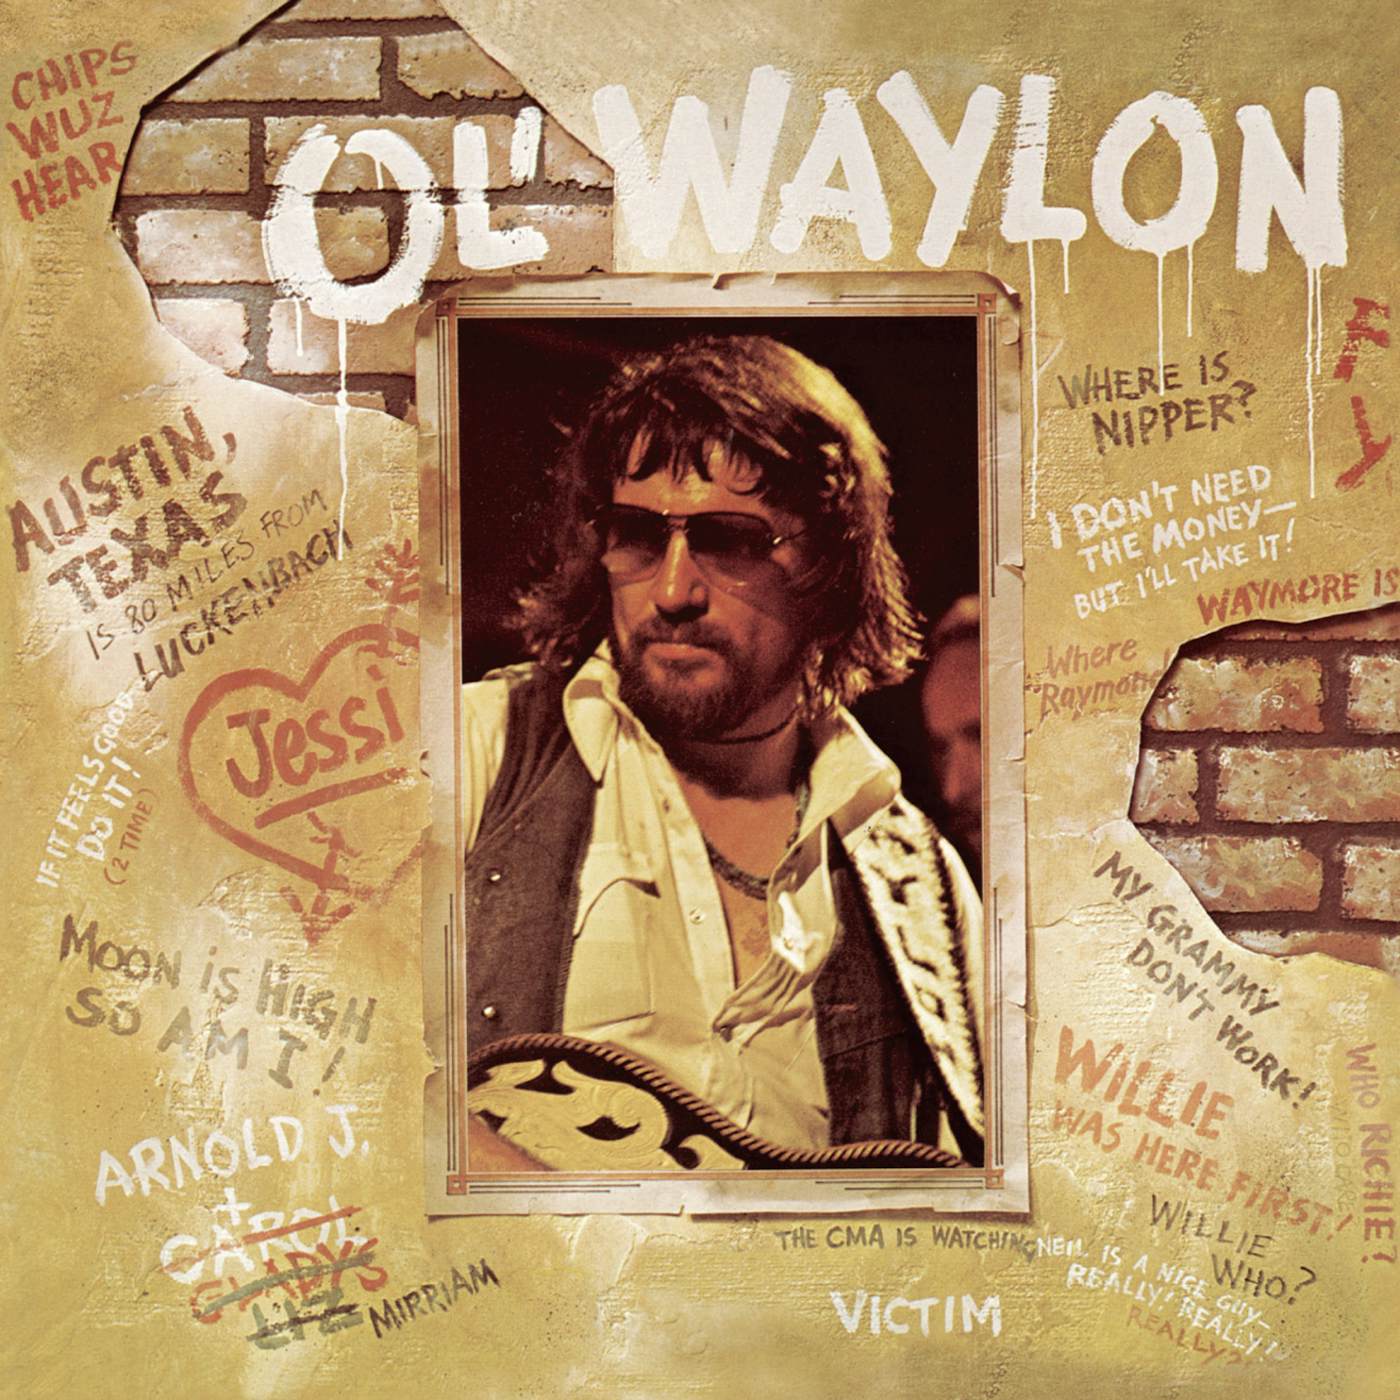 Waylon Jennings OL WAYLON CD